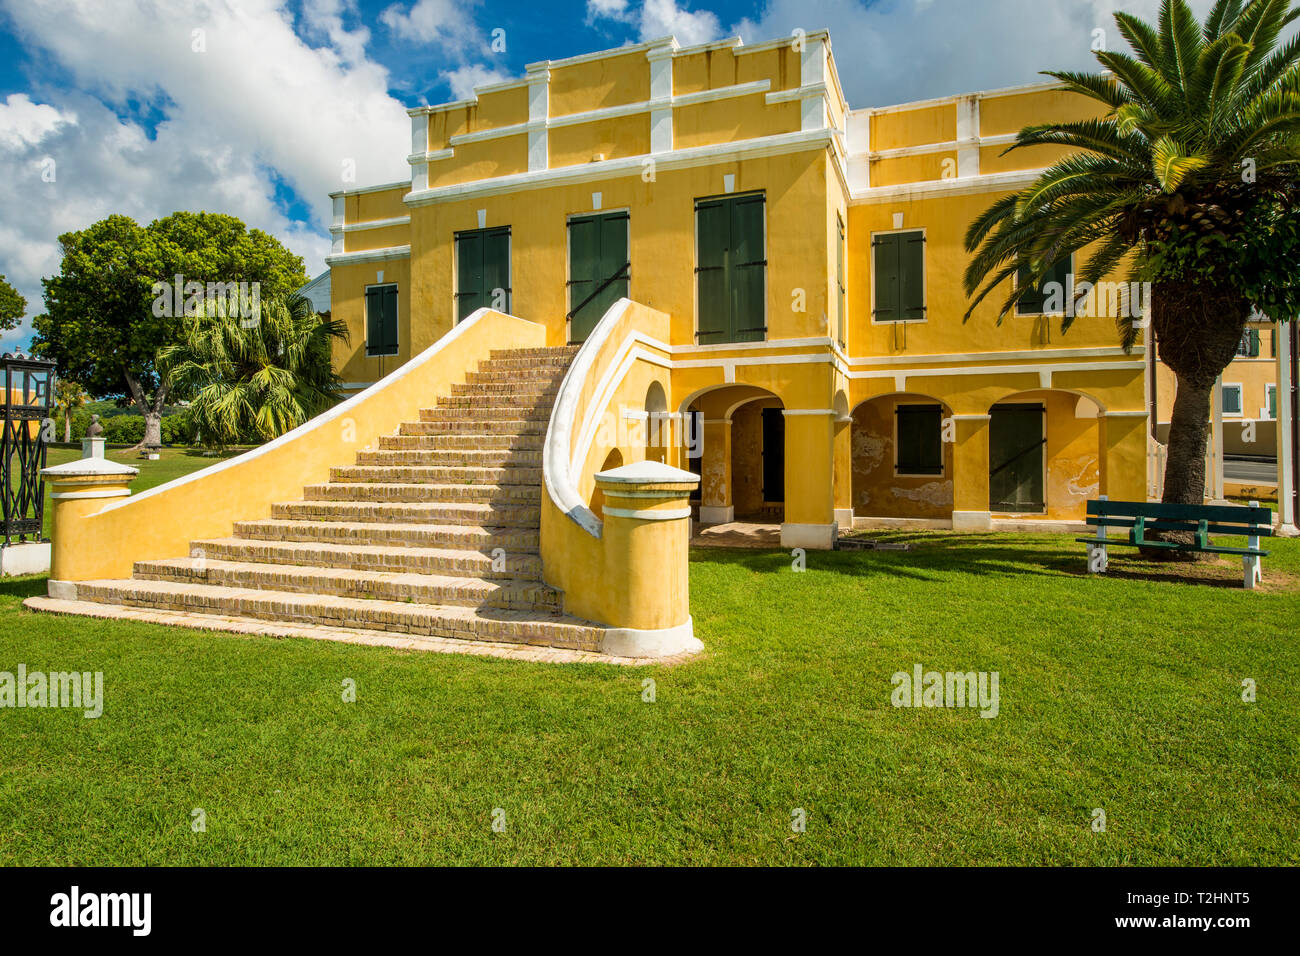 Alte Dänische Zollhaus, Denkmalliste, Christiansted, St. Croix, US Virgin Islands, Karibik Stockfoto